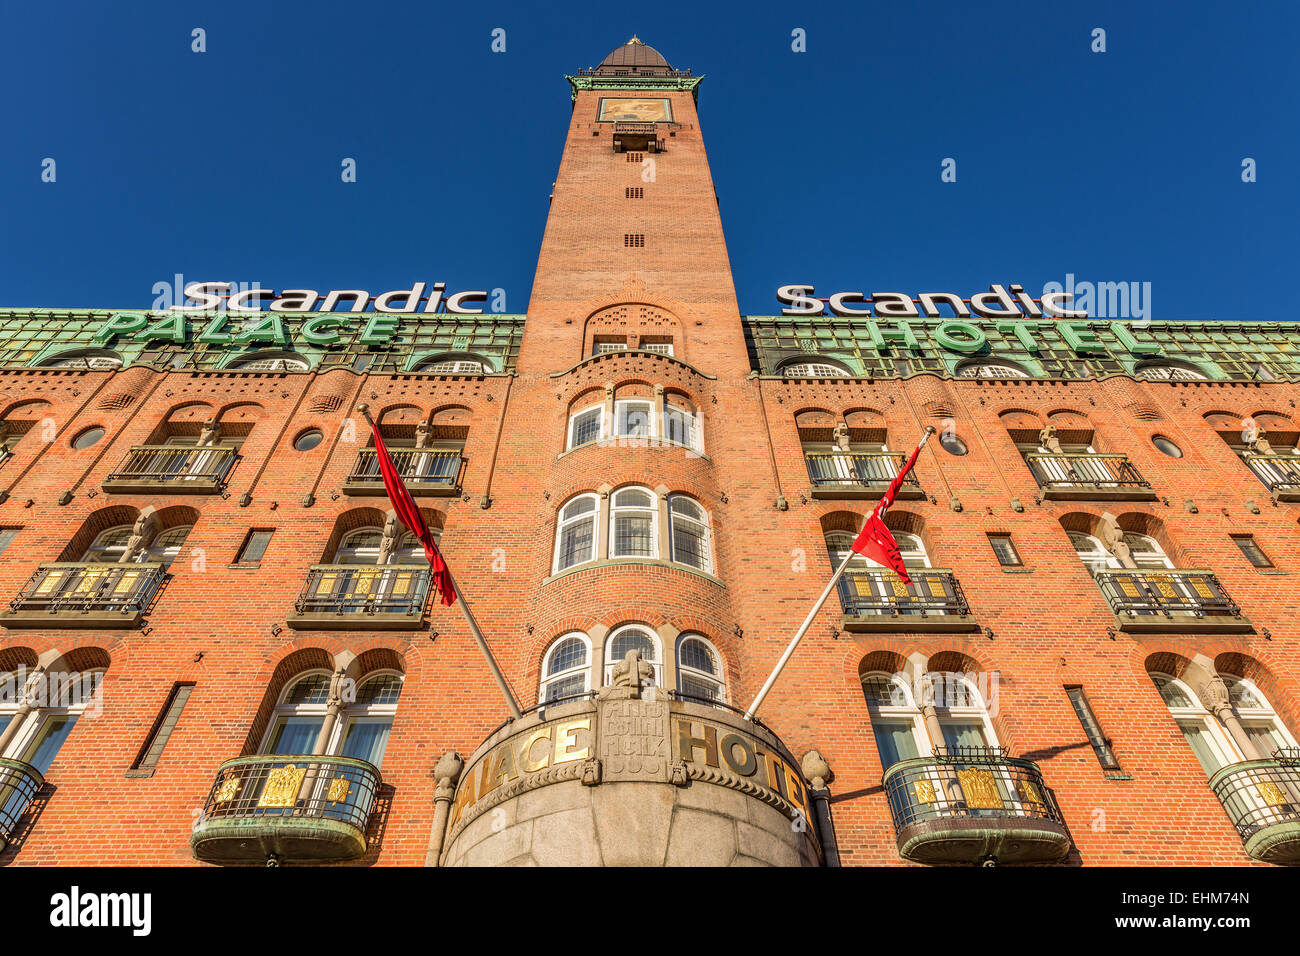 Scandic Palace Hotel on the Town Hall square, Radhus Pladsen, Copenhagen, Denmark Stock Photo